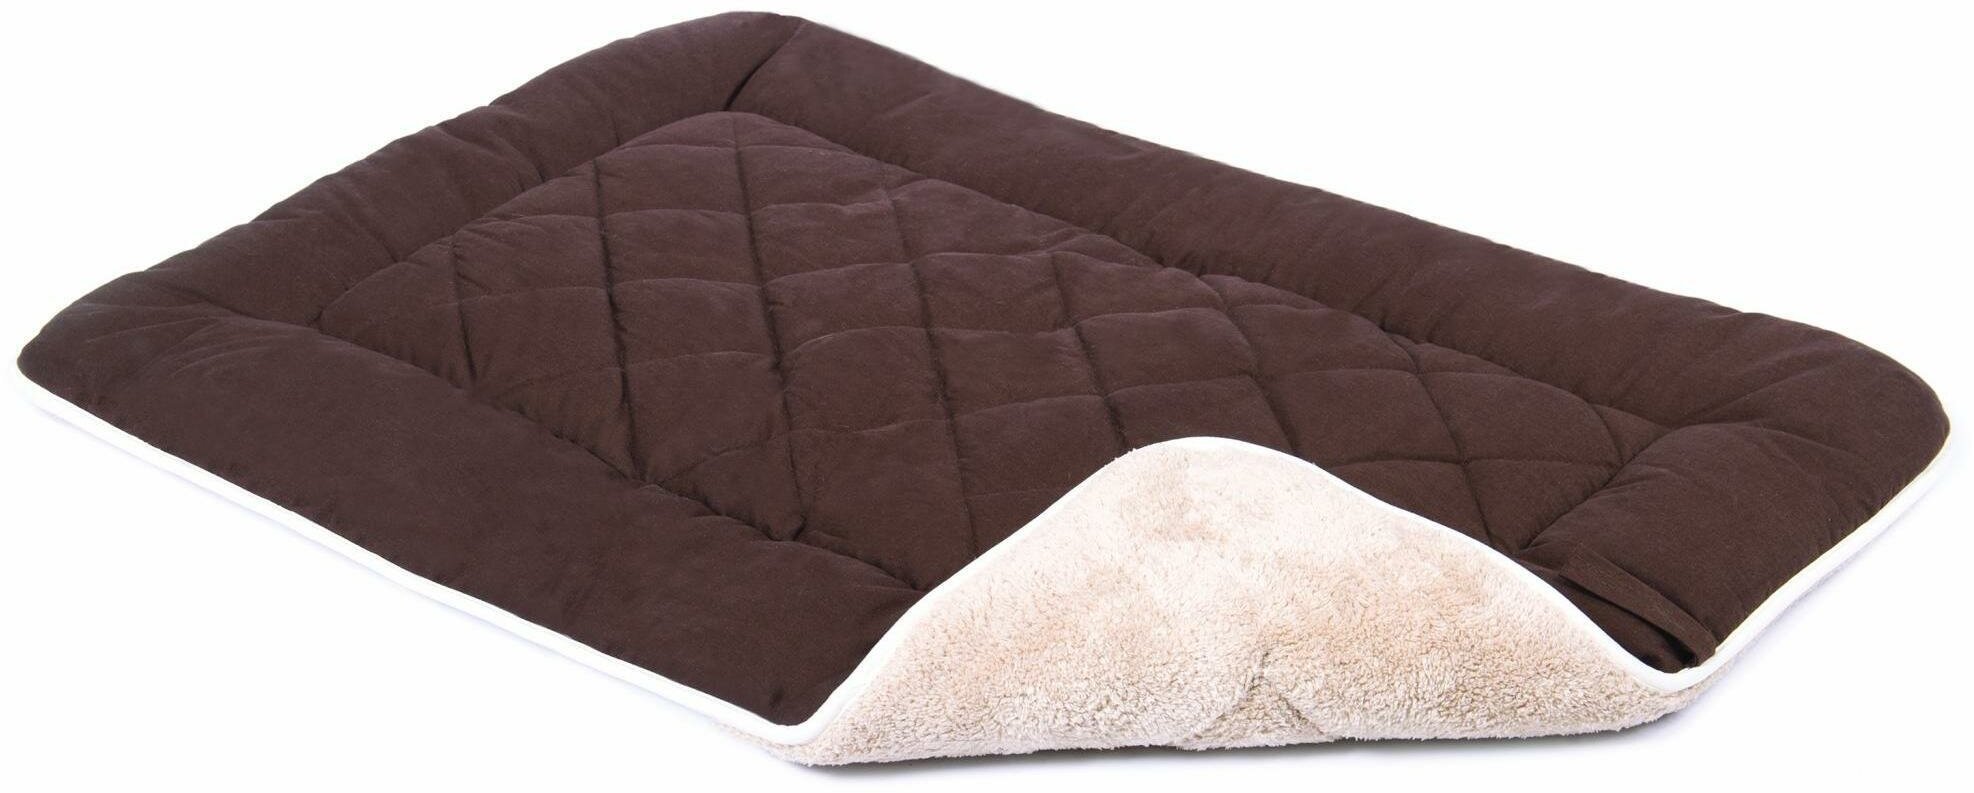 Подстилка для животных Dog Gone Smart Sleeper Cushion XXL, размер 76x116см, коричневая